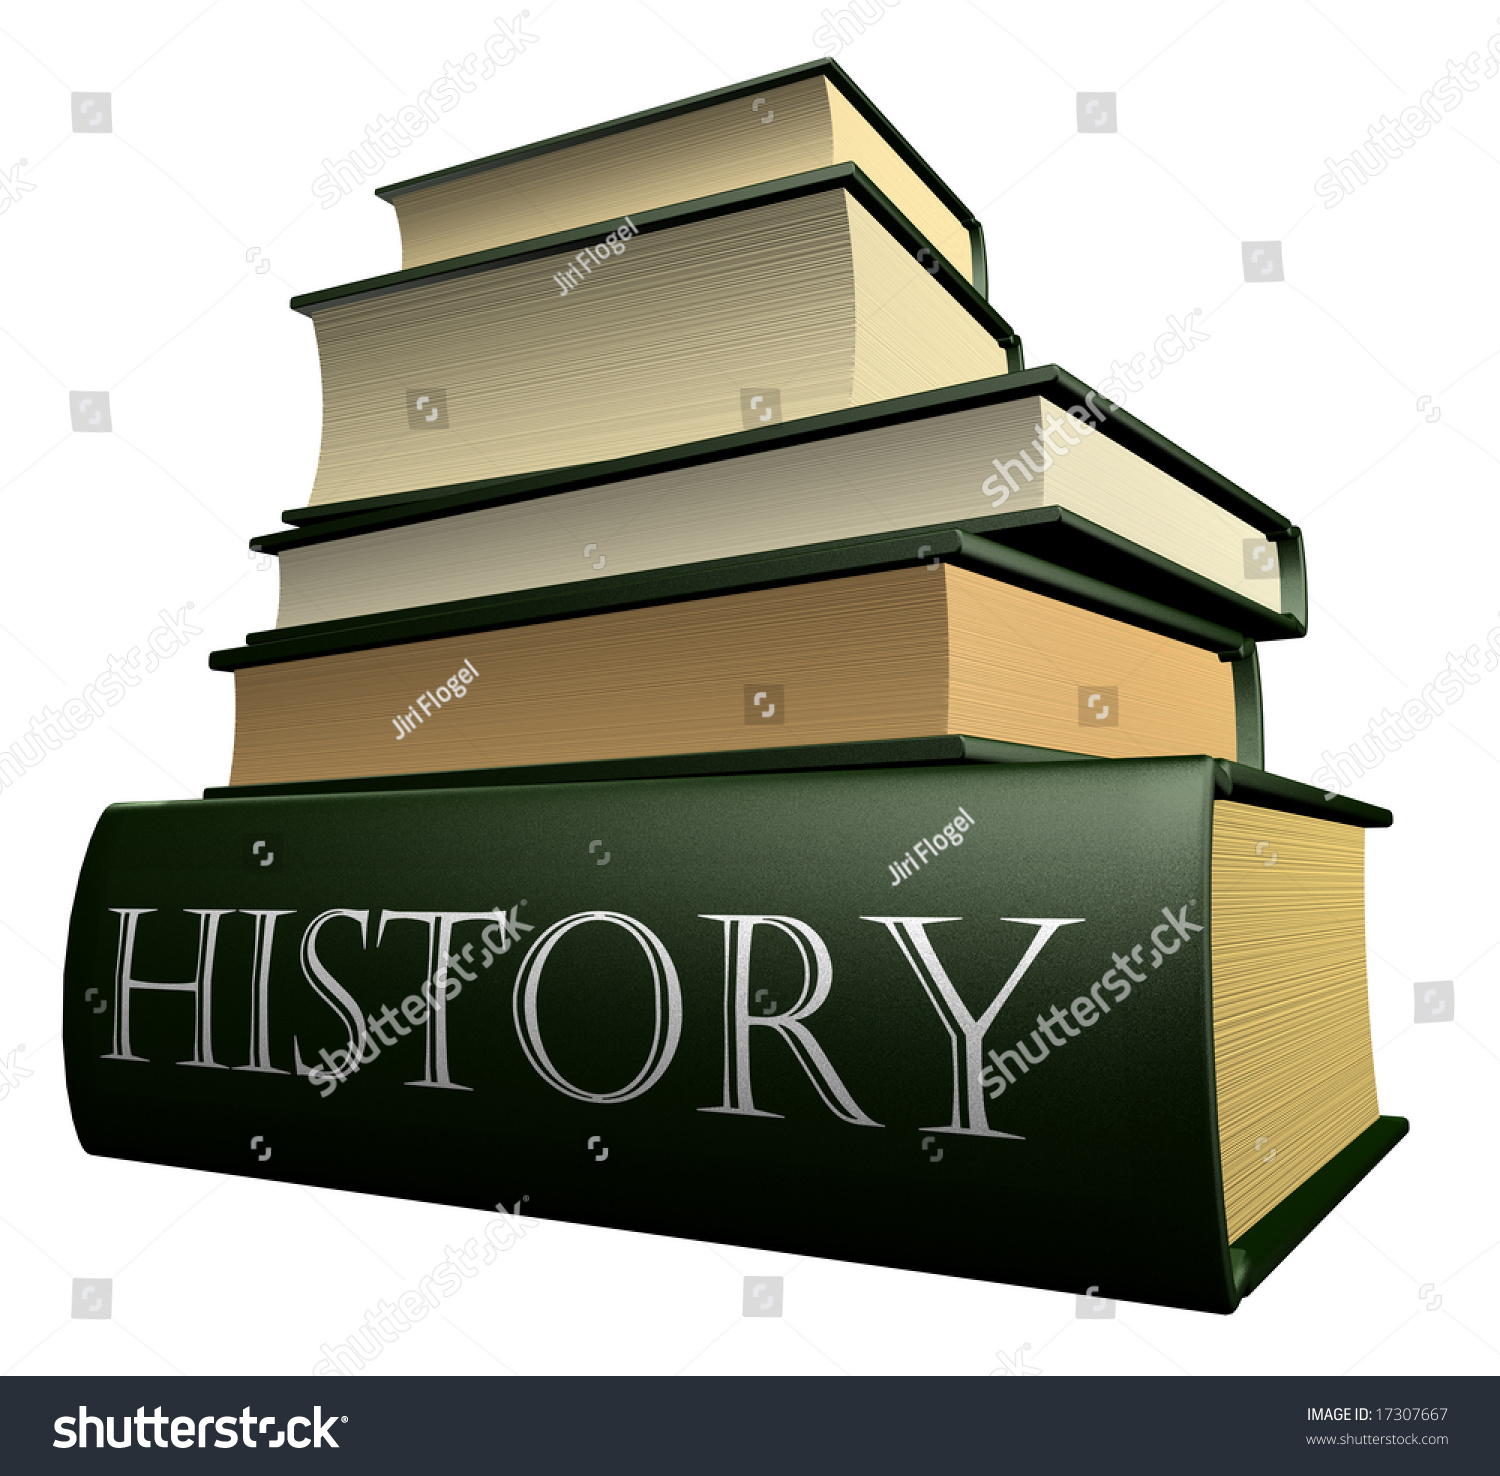 history textbook clipart - photo #17